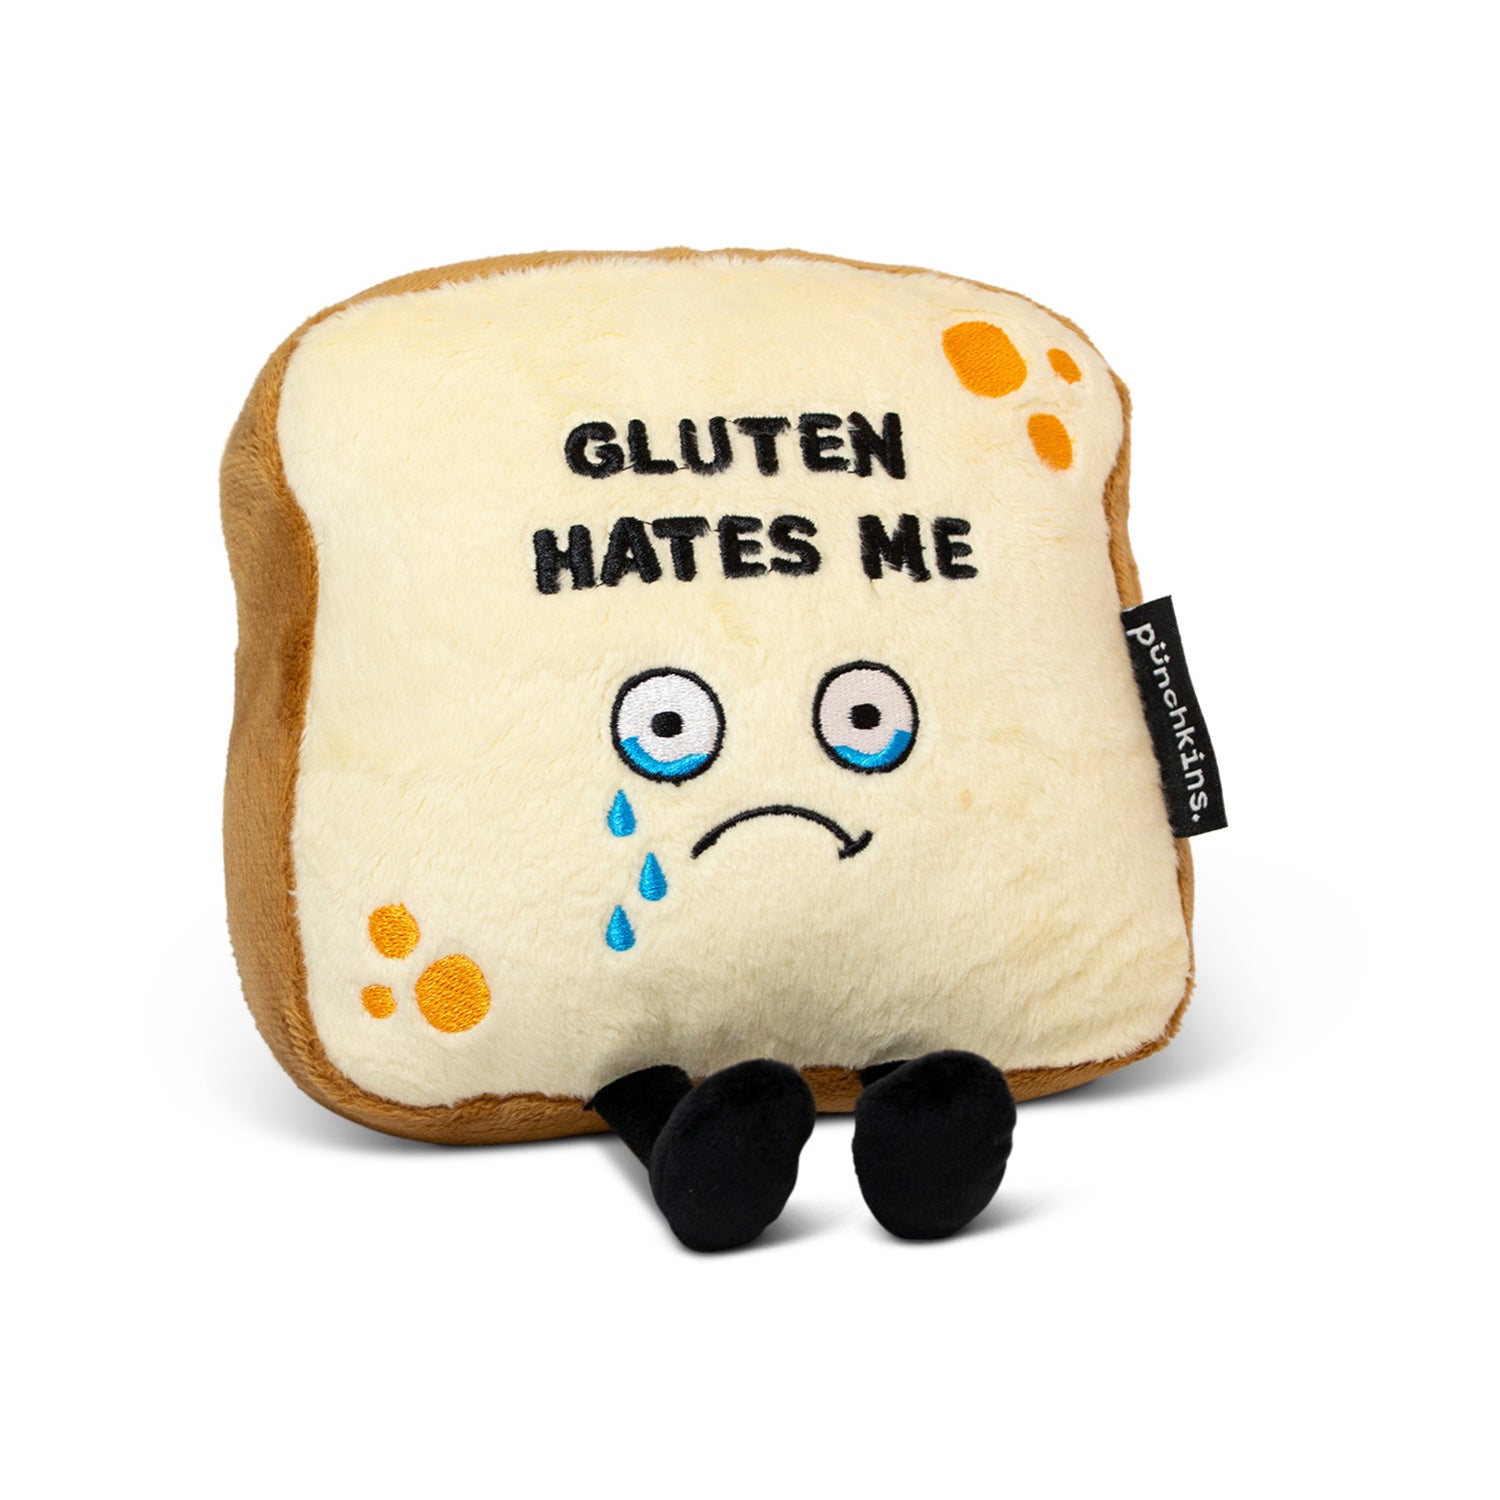 Gluten Hates Me' - Bread Plush - Sensory Circle